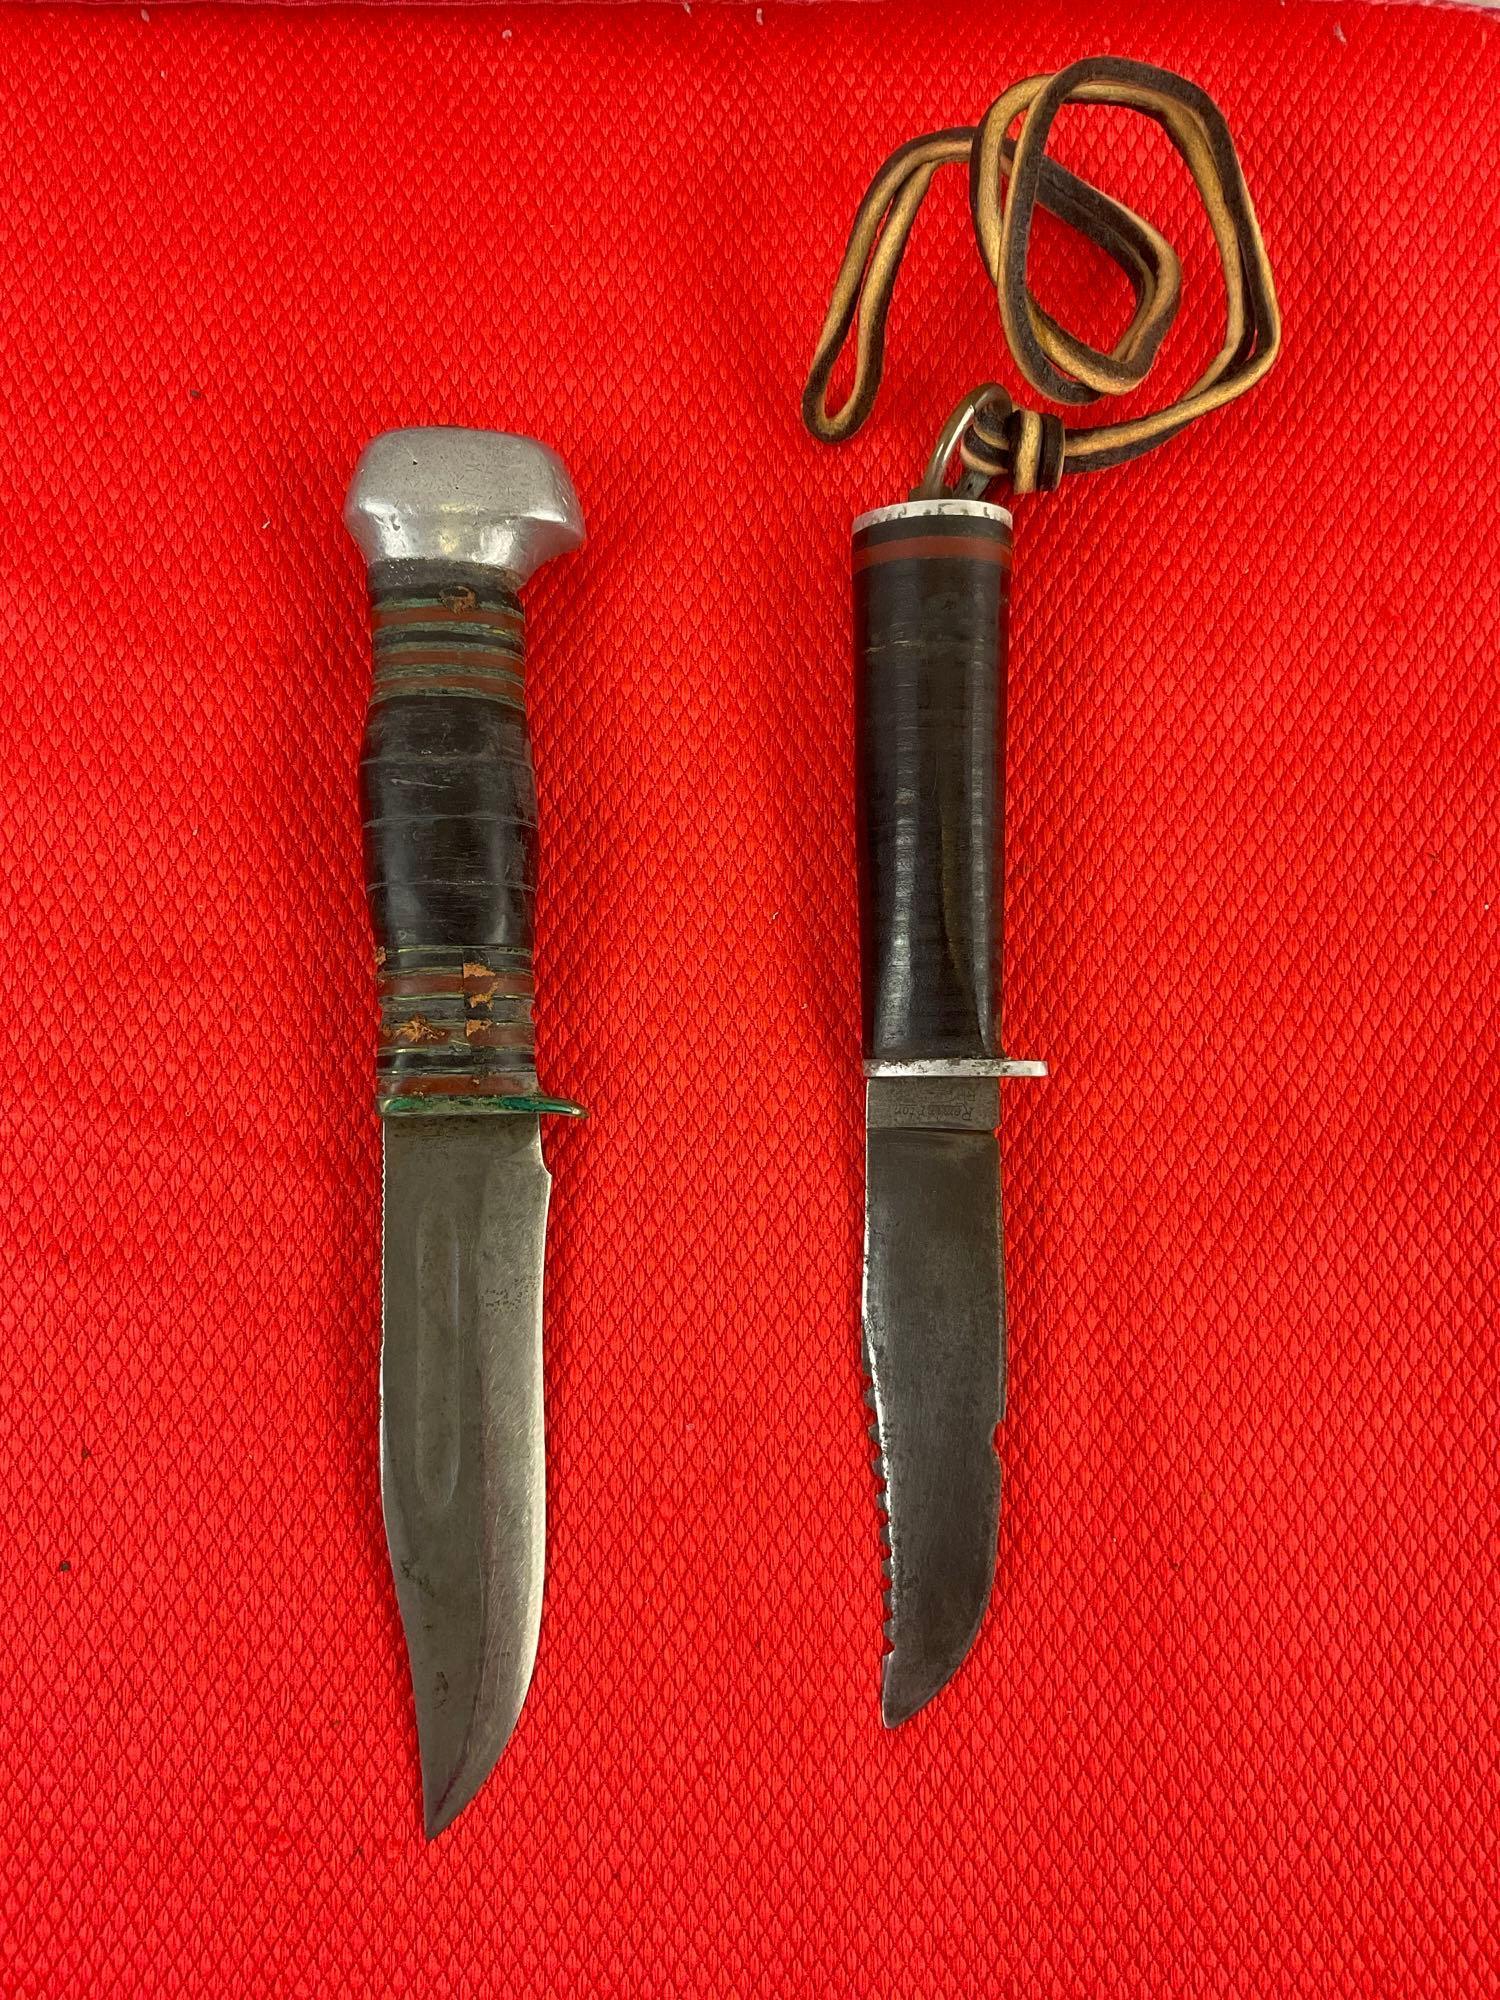 2 pcs Vintage Remington Collectible Fixed Blade Knives Models RH34 & RH84 w/ Sheathes. See pics.